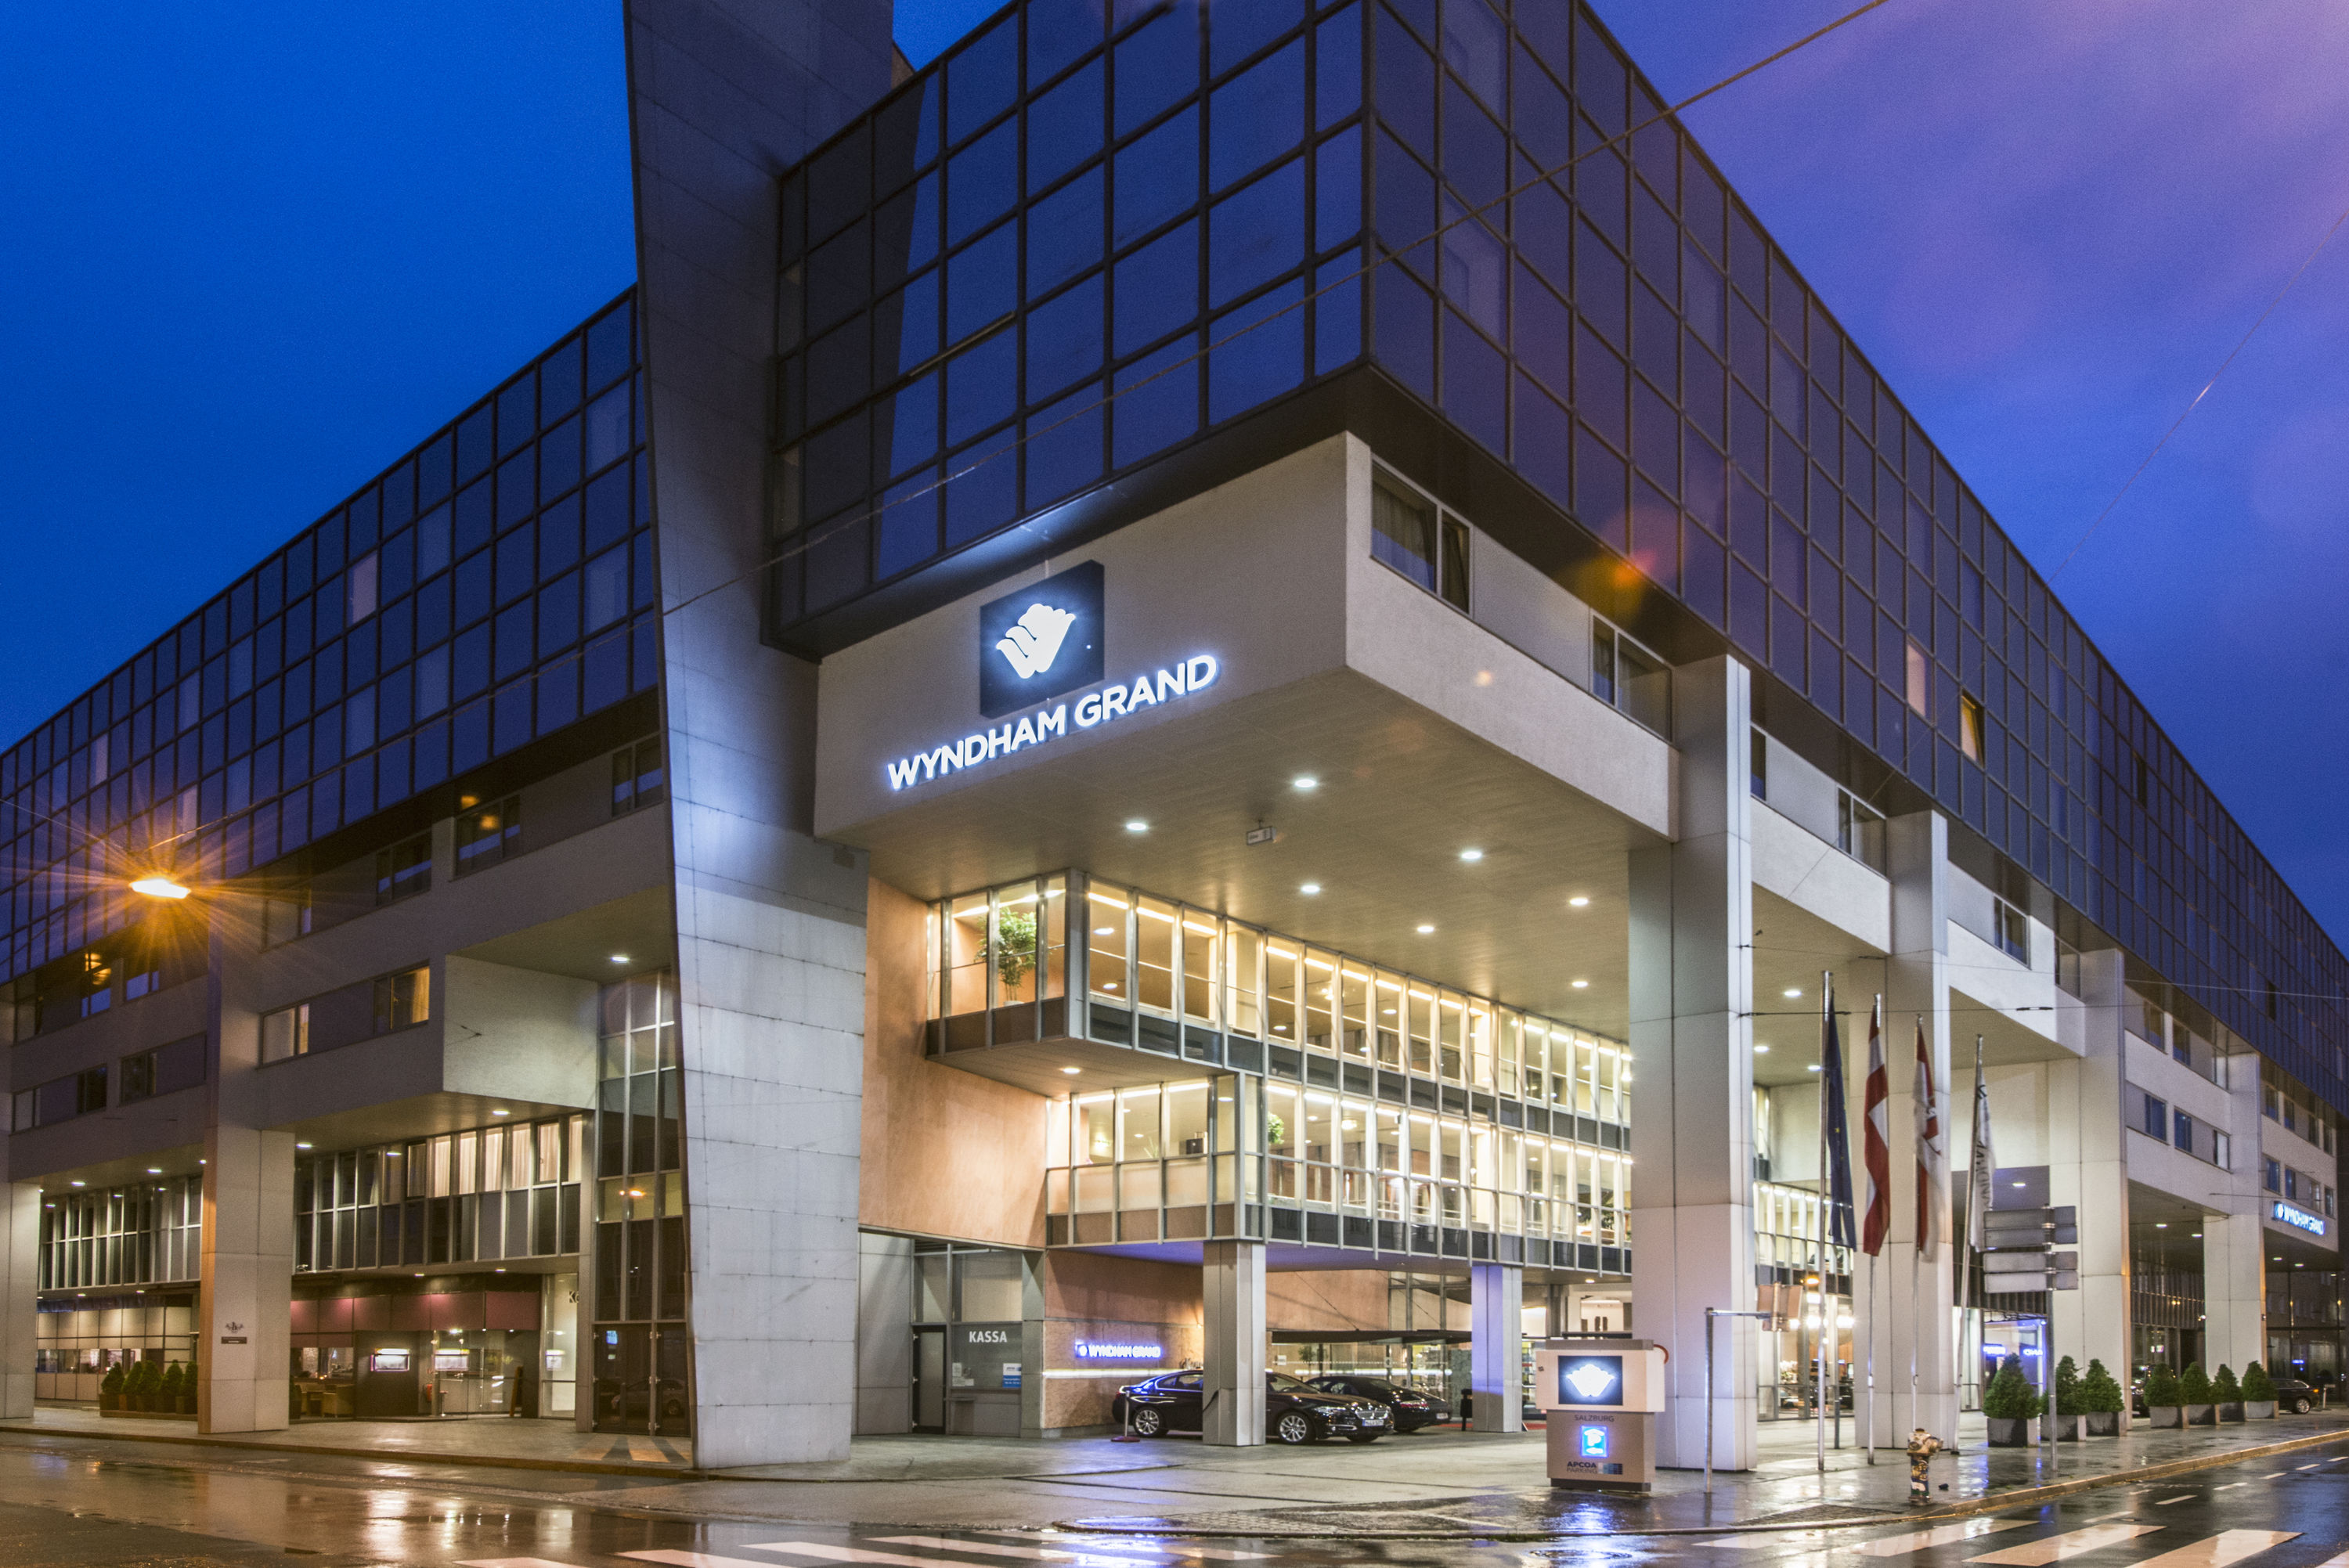 Wyndham Grand Salzburg Conference Centre Salzburg, AT Hotels